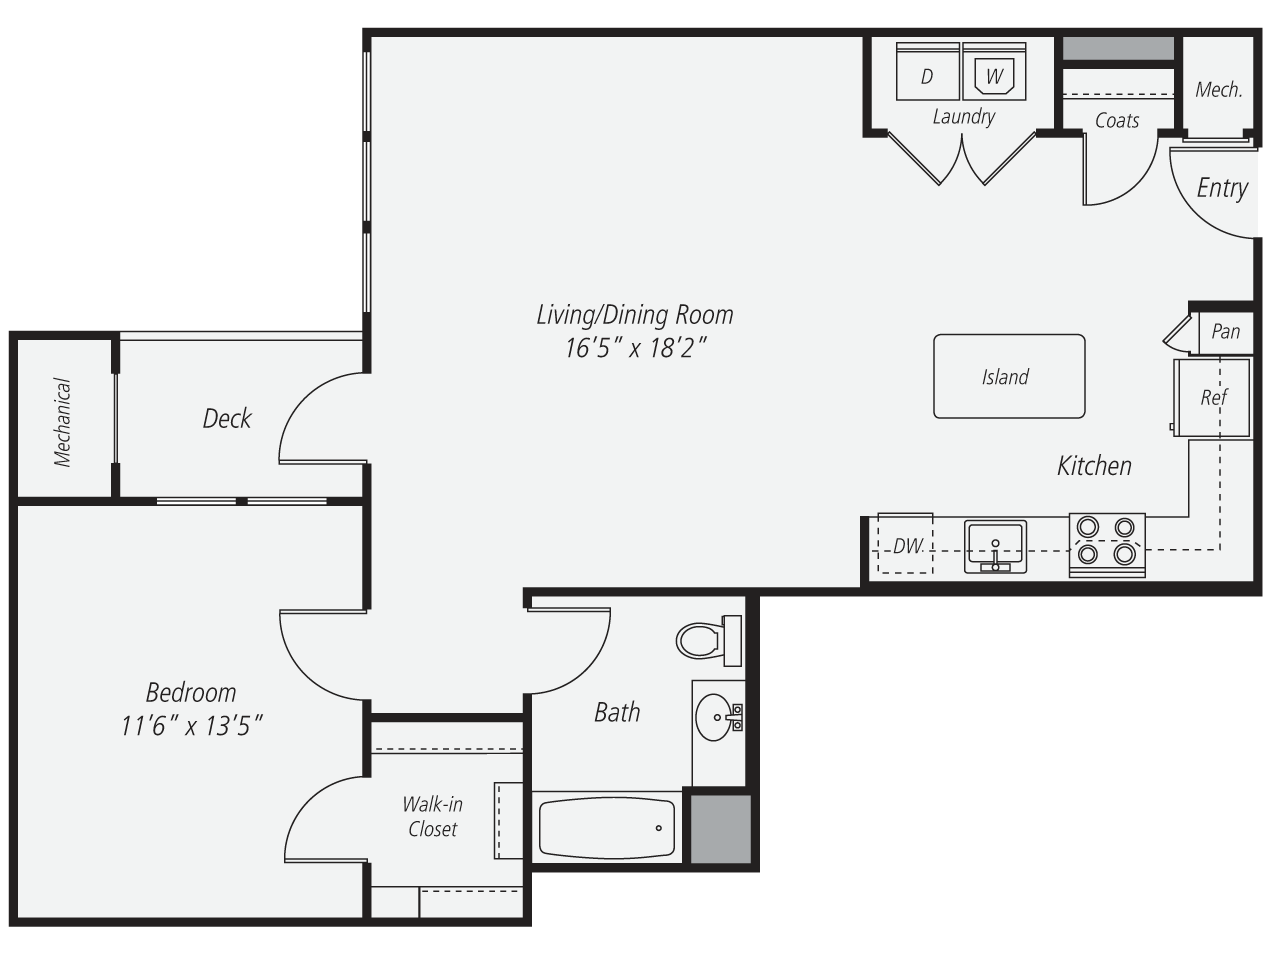 Floorplan for Apartment #221, 1 bedroom unit at Halstead Norwalk